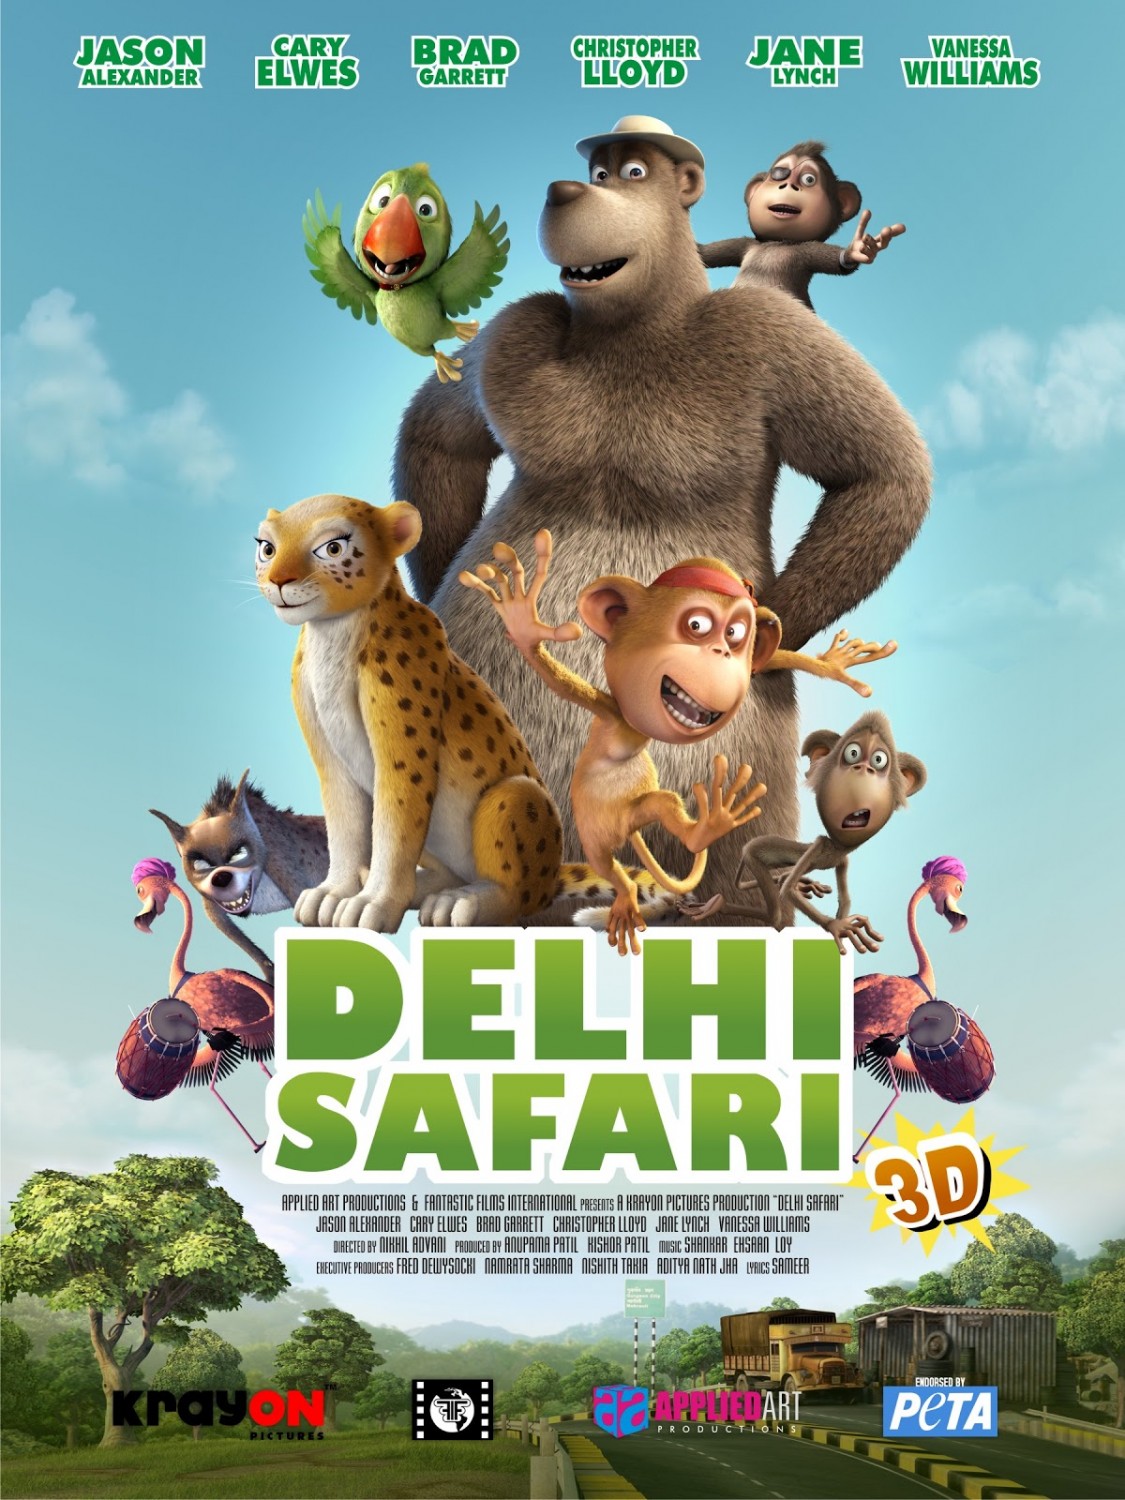 Extra Large Movie Poster Image for Delhi Safari 